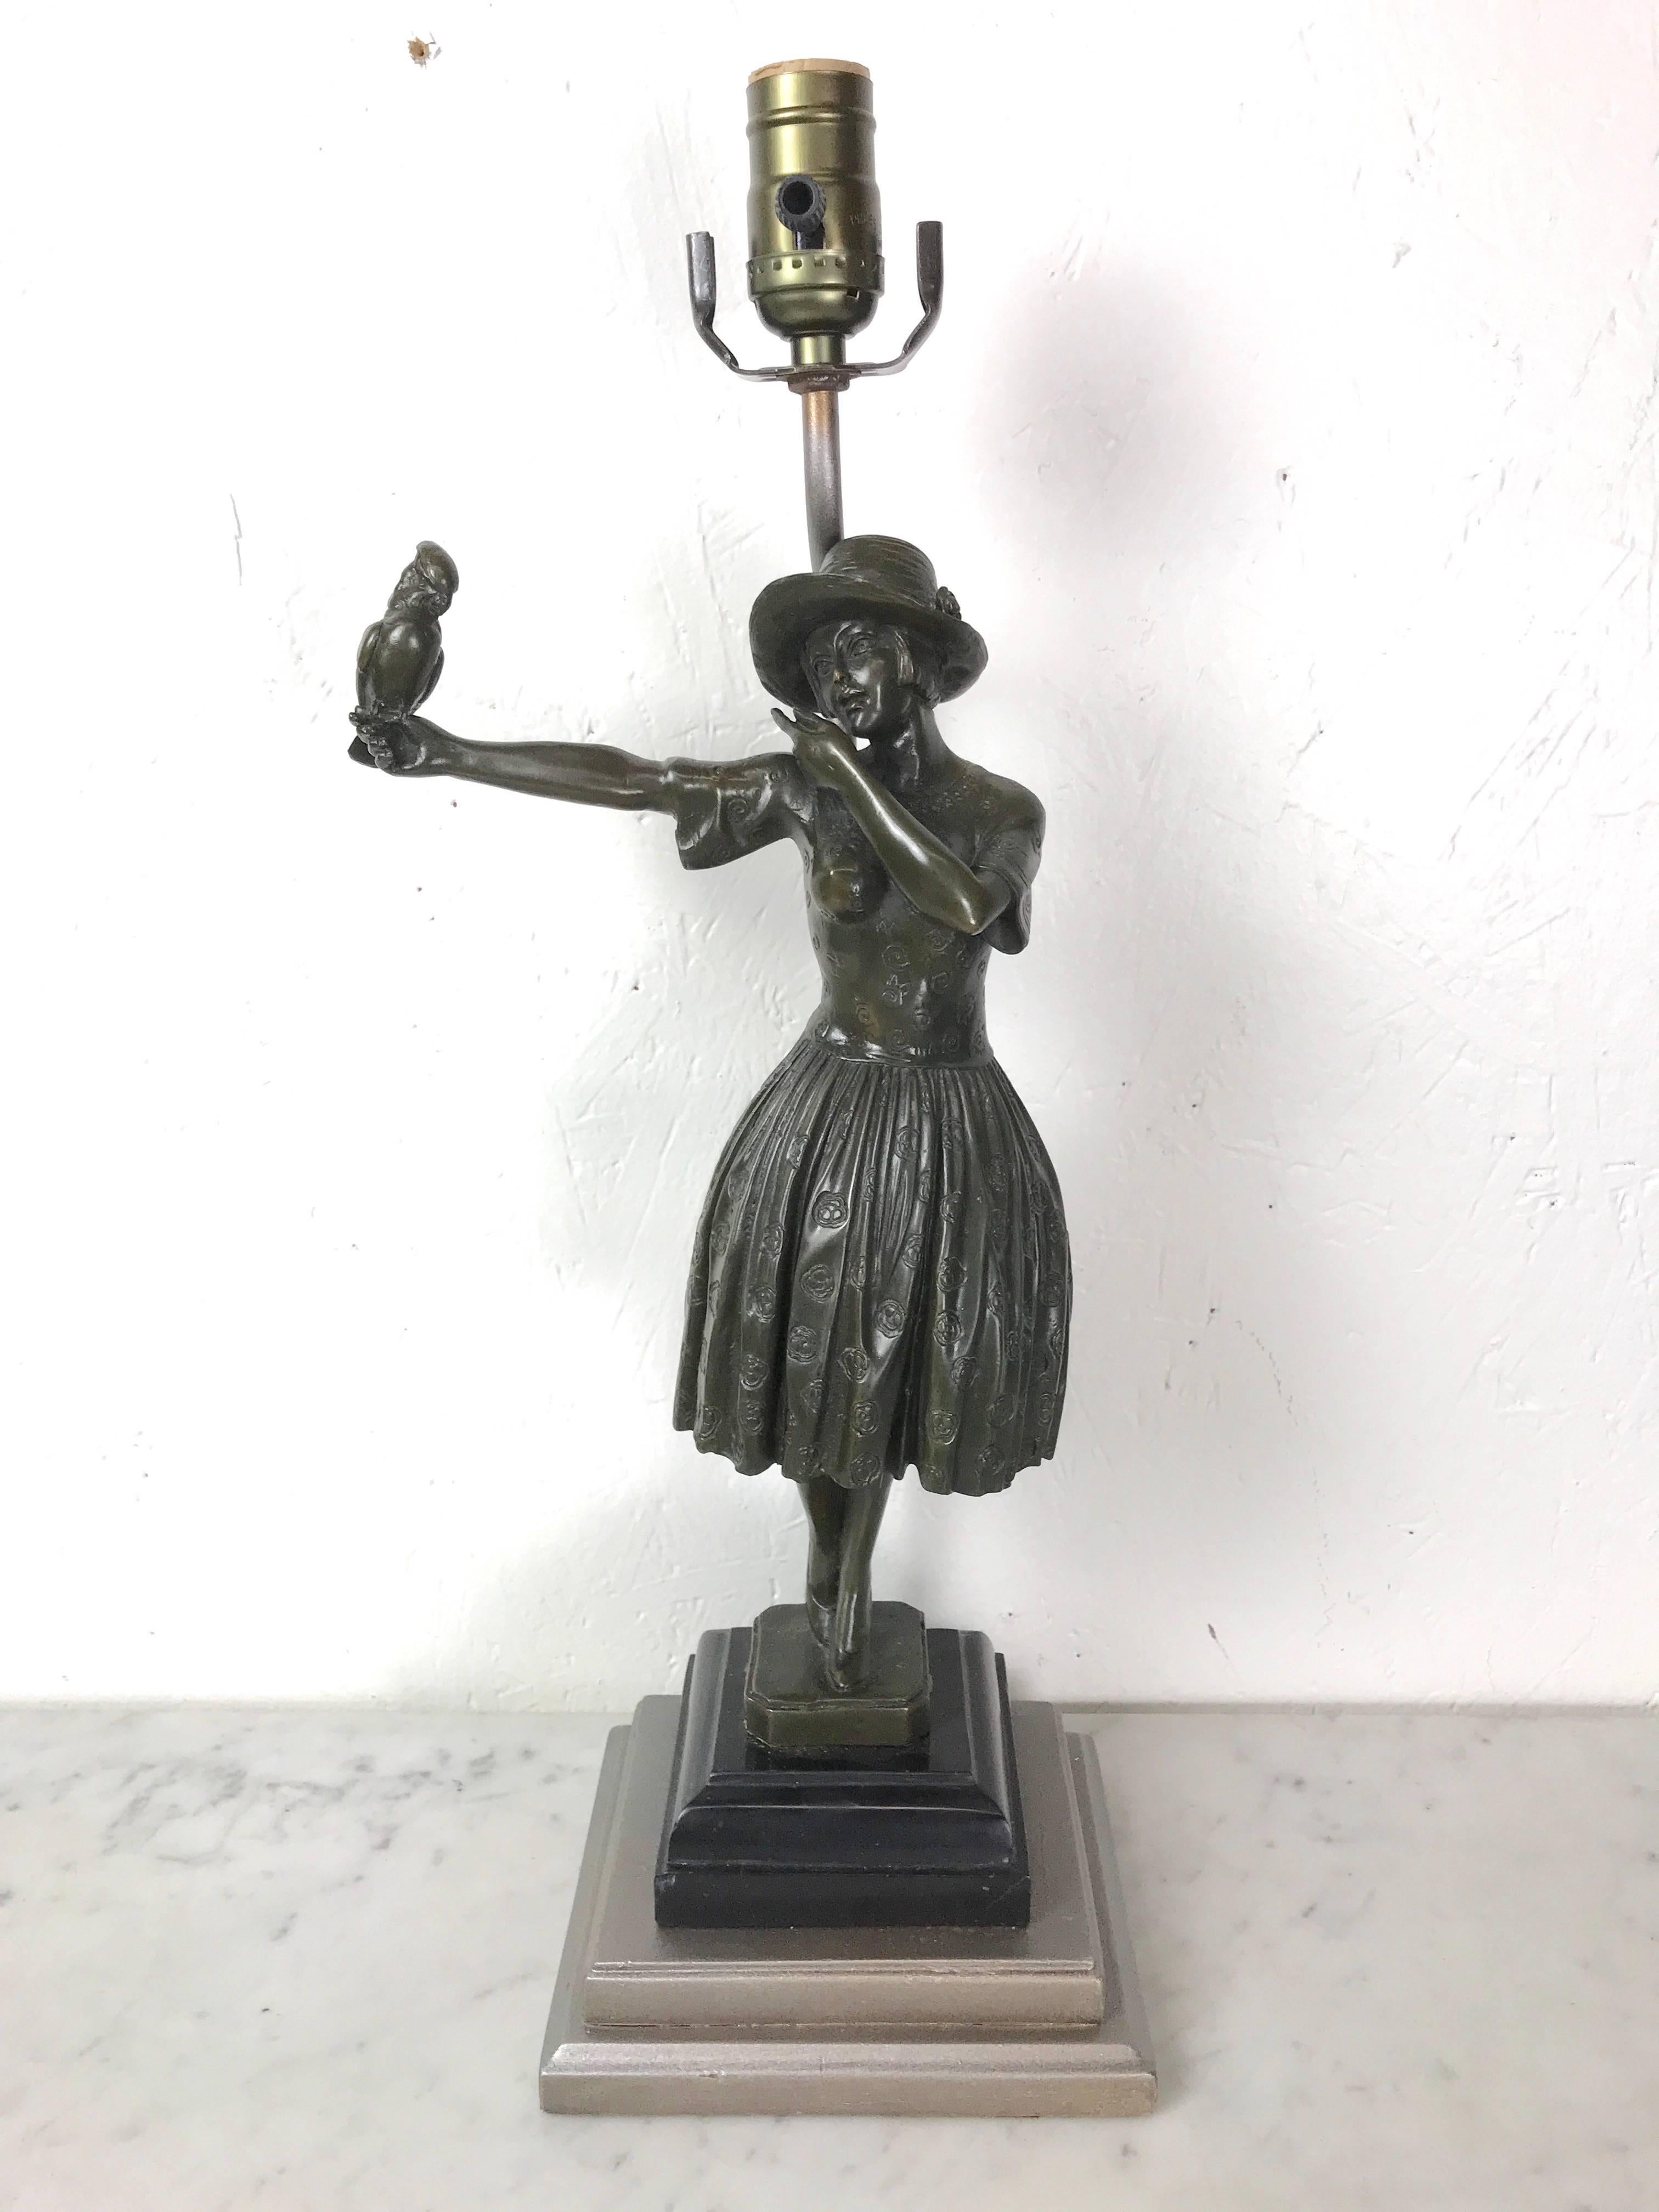 Art Deco bronze sculpture lady with parrot, now as a lamp.
Measures: 21